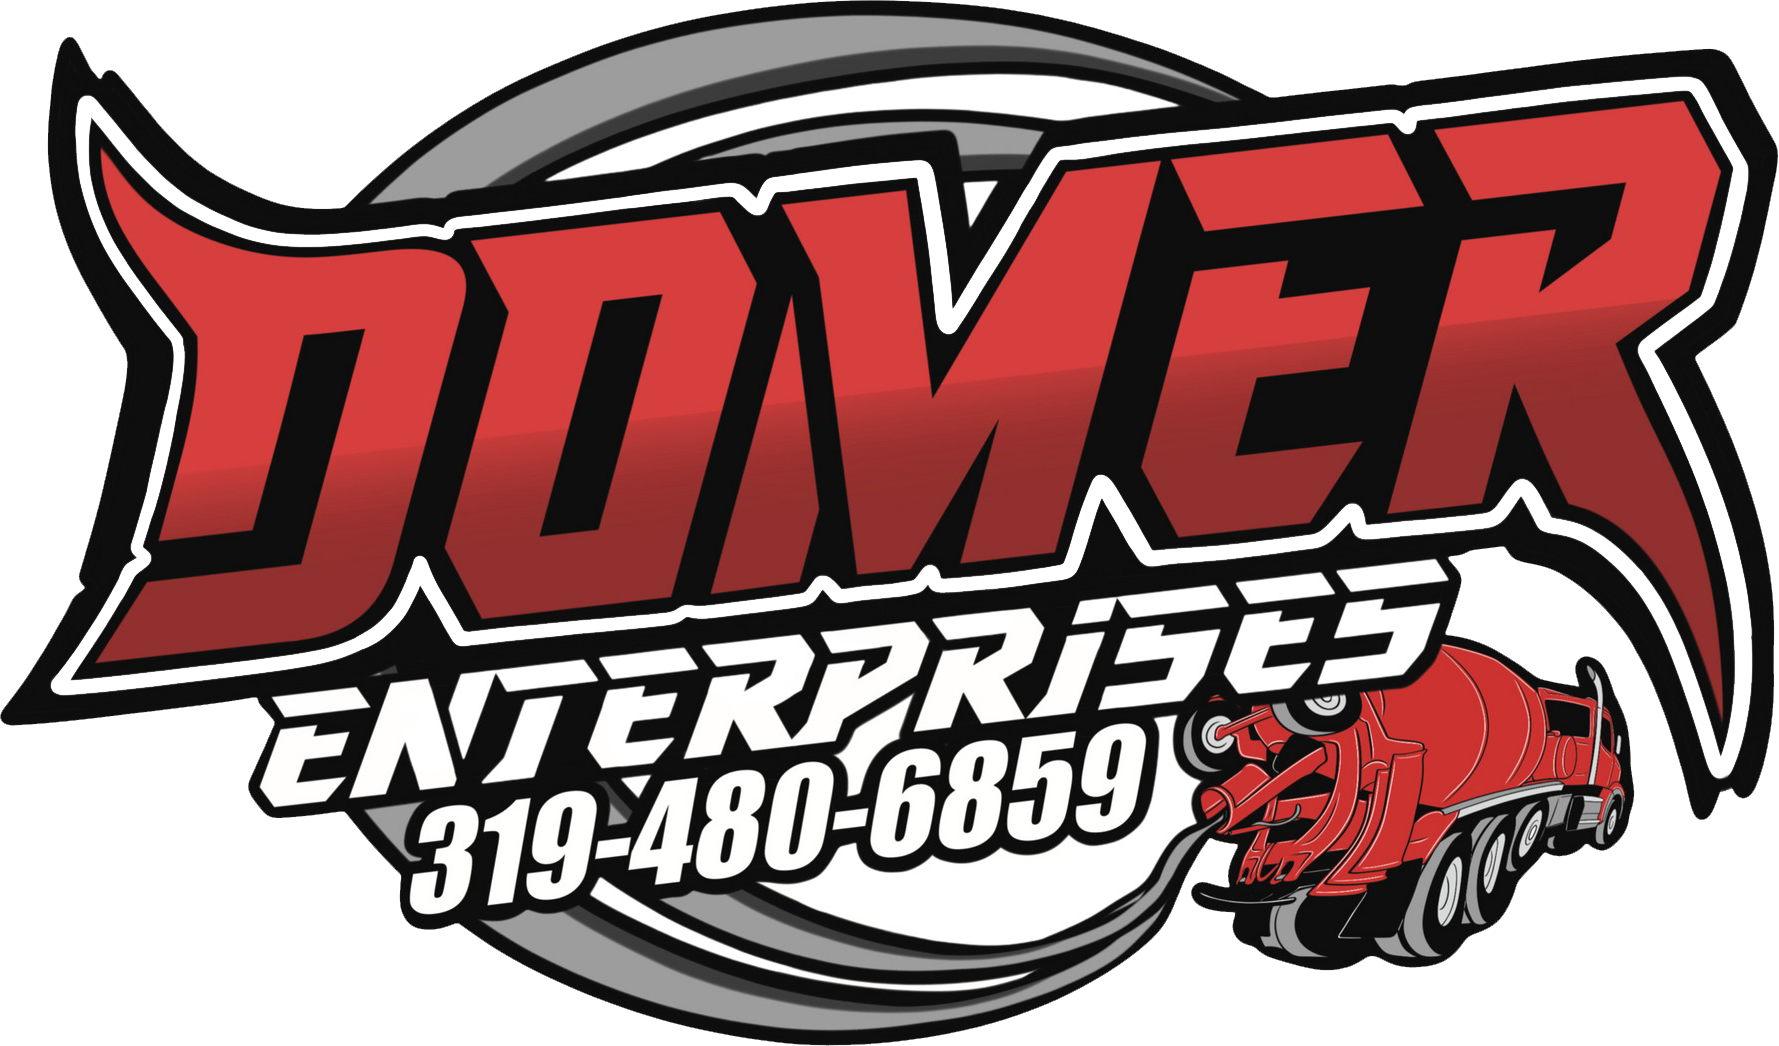 A logo for a company called domer enterprises